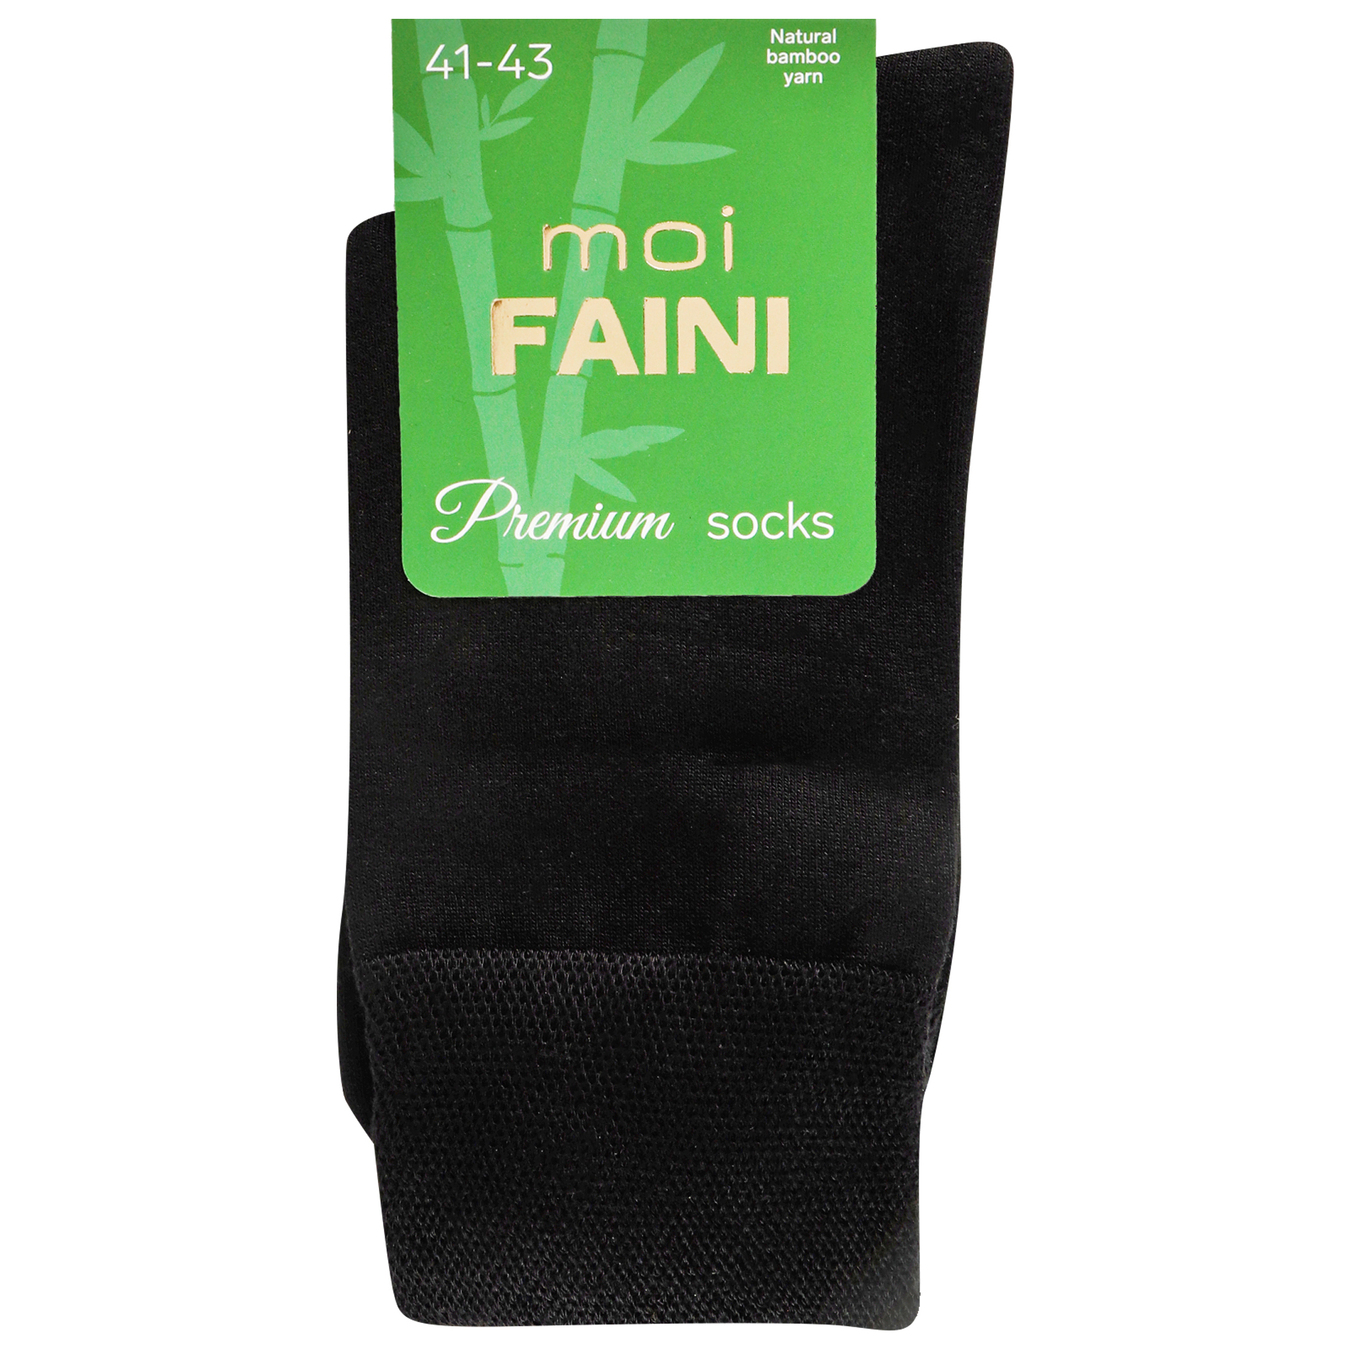 Socks Moi Faini men's classic bamboo black 41-43 years.